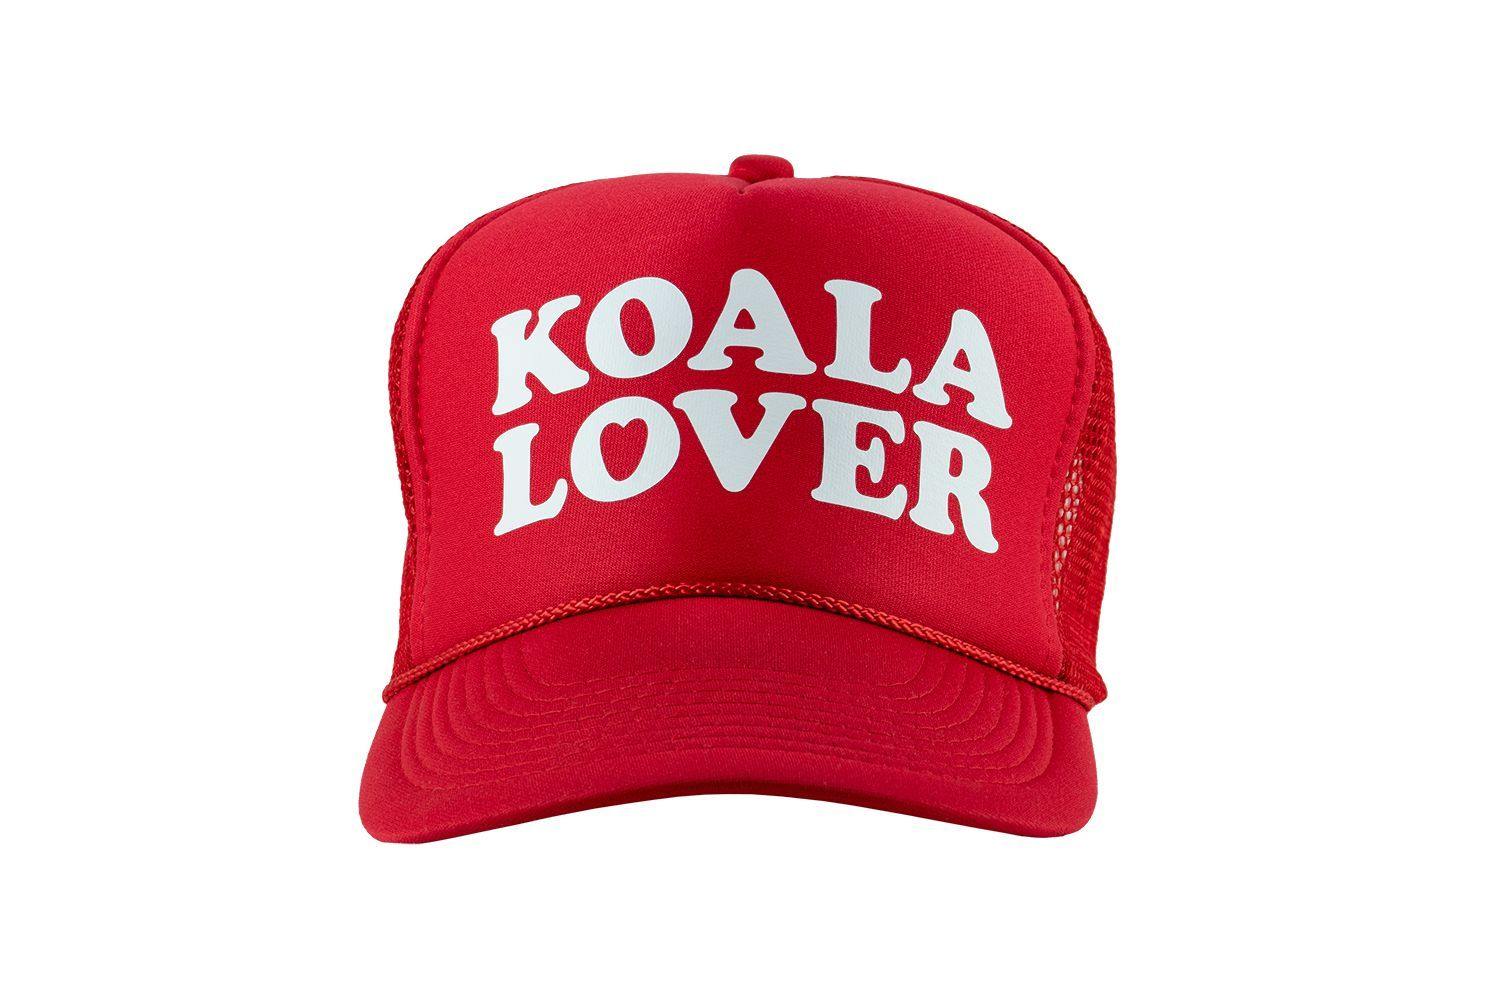 Koala Lover (Parrot red) high crown trucker cap with mesh back and snapback - Tropic Trucker Australia®